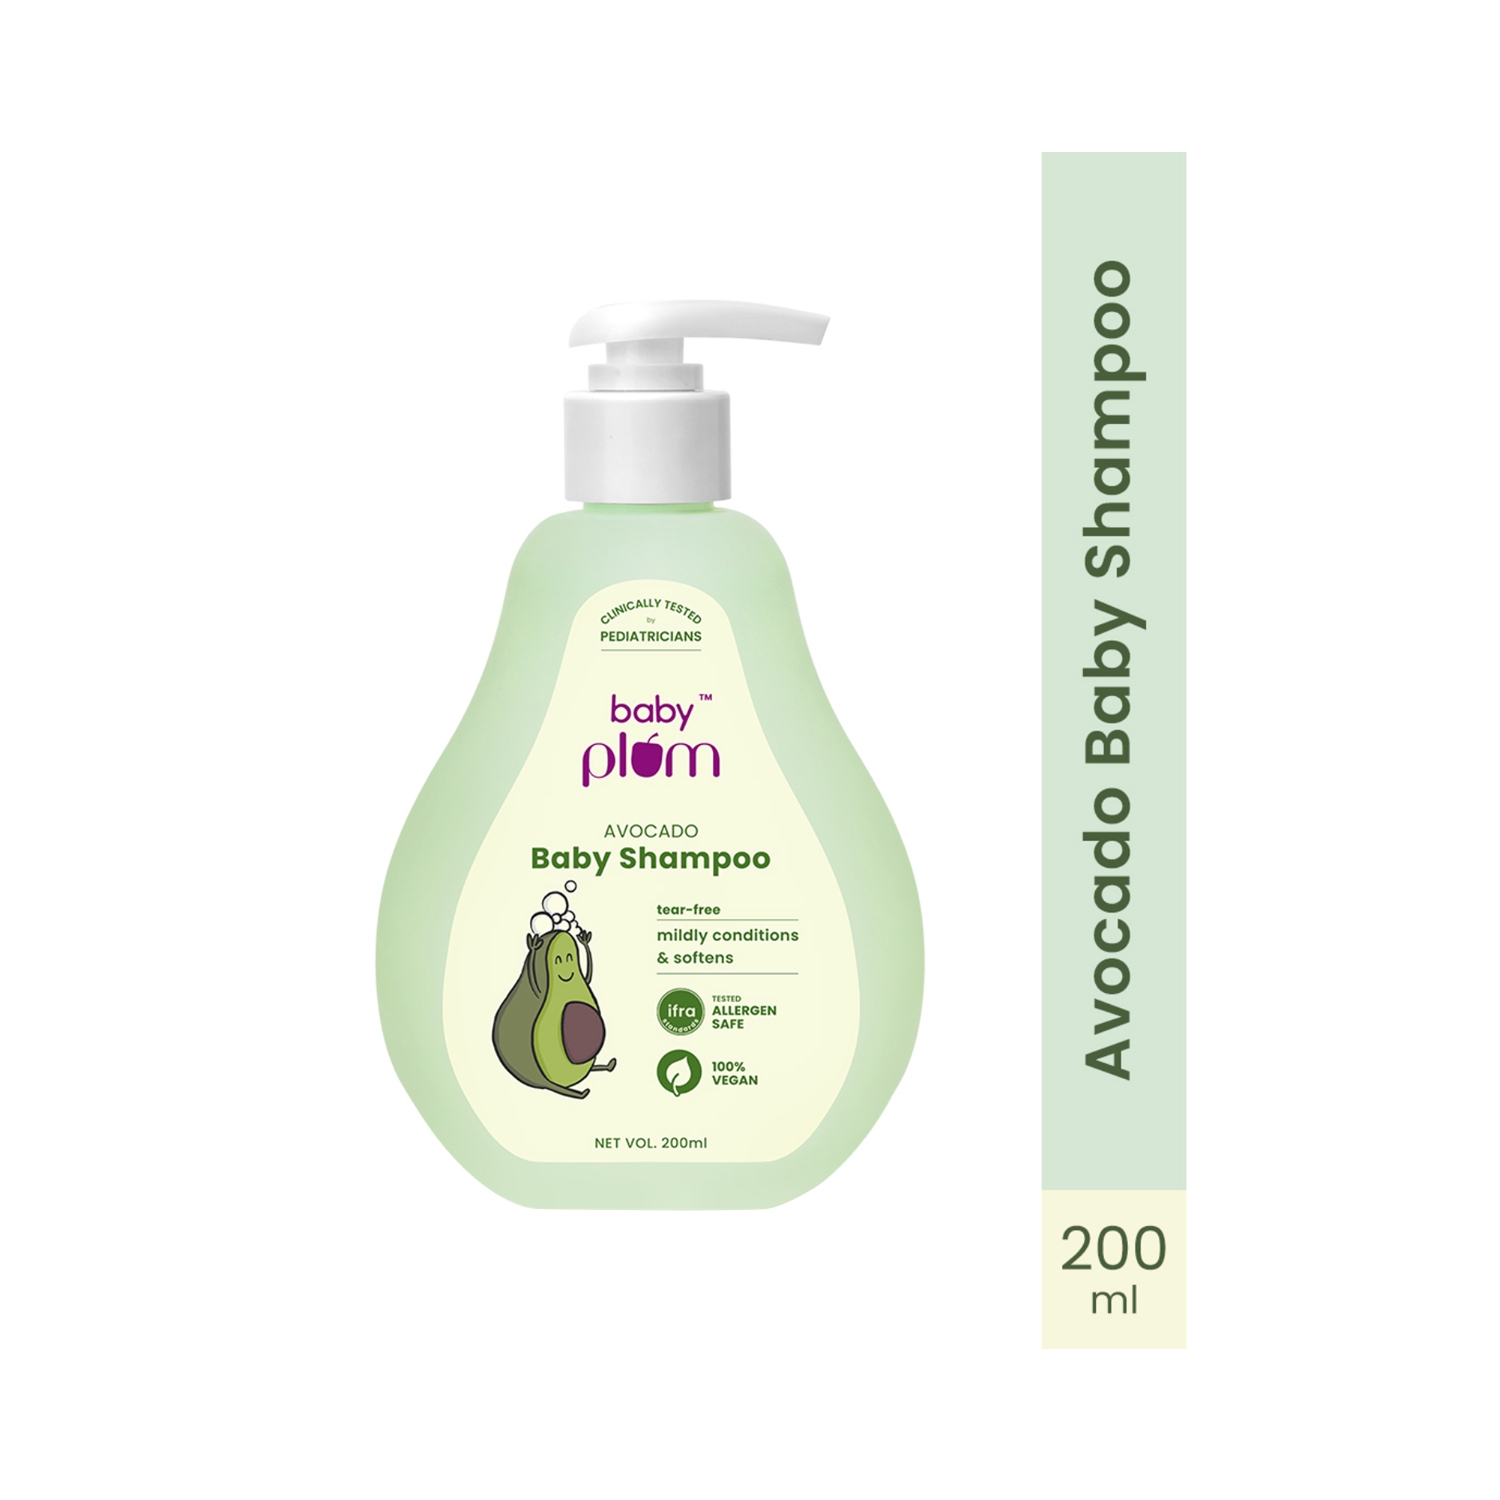 Plum | Baby Plum Avocado Baby Shampoo (200ml)